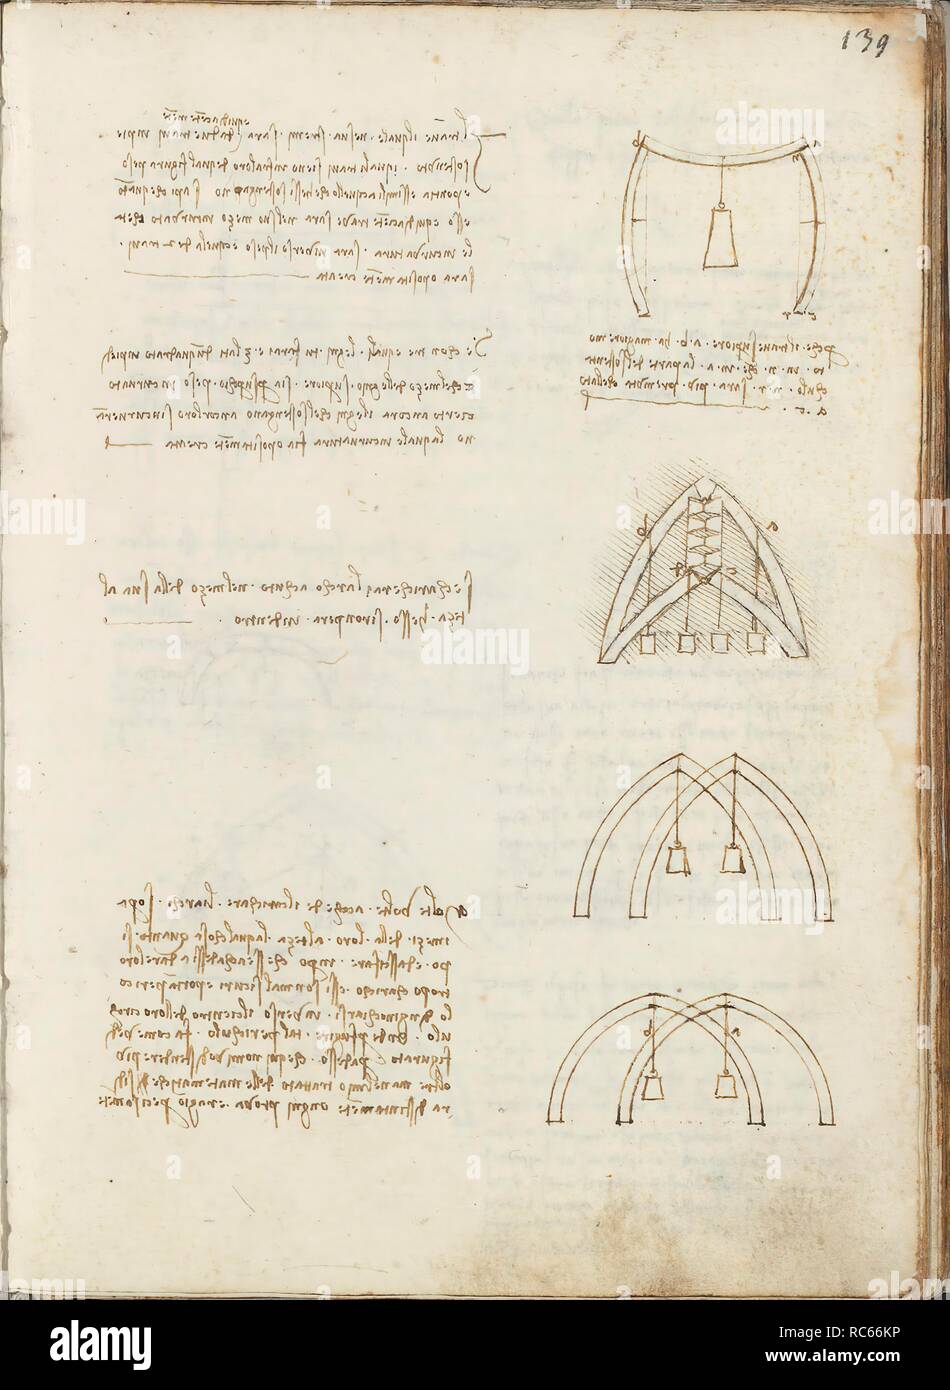 Folio f 139r. Codex Madrid I (Ms. 8937) "Treaty of statics and mechanics", 192 folios with 384 pages. Internal format: 215 x 145 mm. CIVIL ENGINEERING, CONSTRUCTION. APPLIED MECHANICS (MACHINES AND WITS). MENTION OF MATERIALS. PRINCIPLES OF MECHANICS, CINEMATICS, DYNAMICS. Museum: BIBLIOTECA NACIONAL DE ESPAÑA, MADRID. Author: LEONARDO DA VINCI. Stock Photo